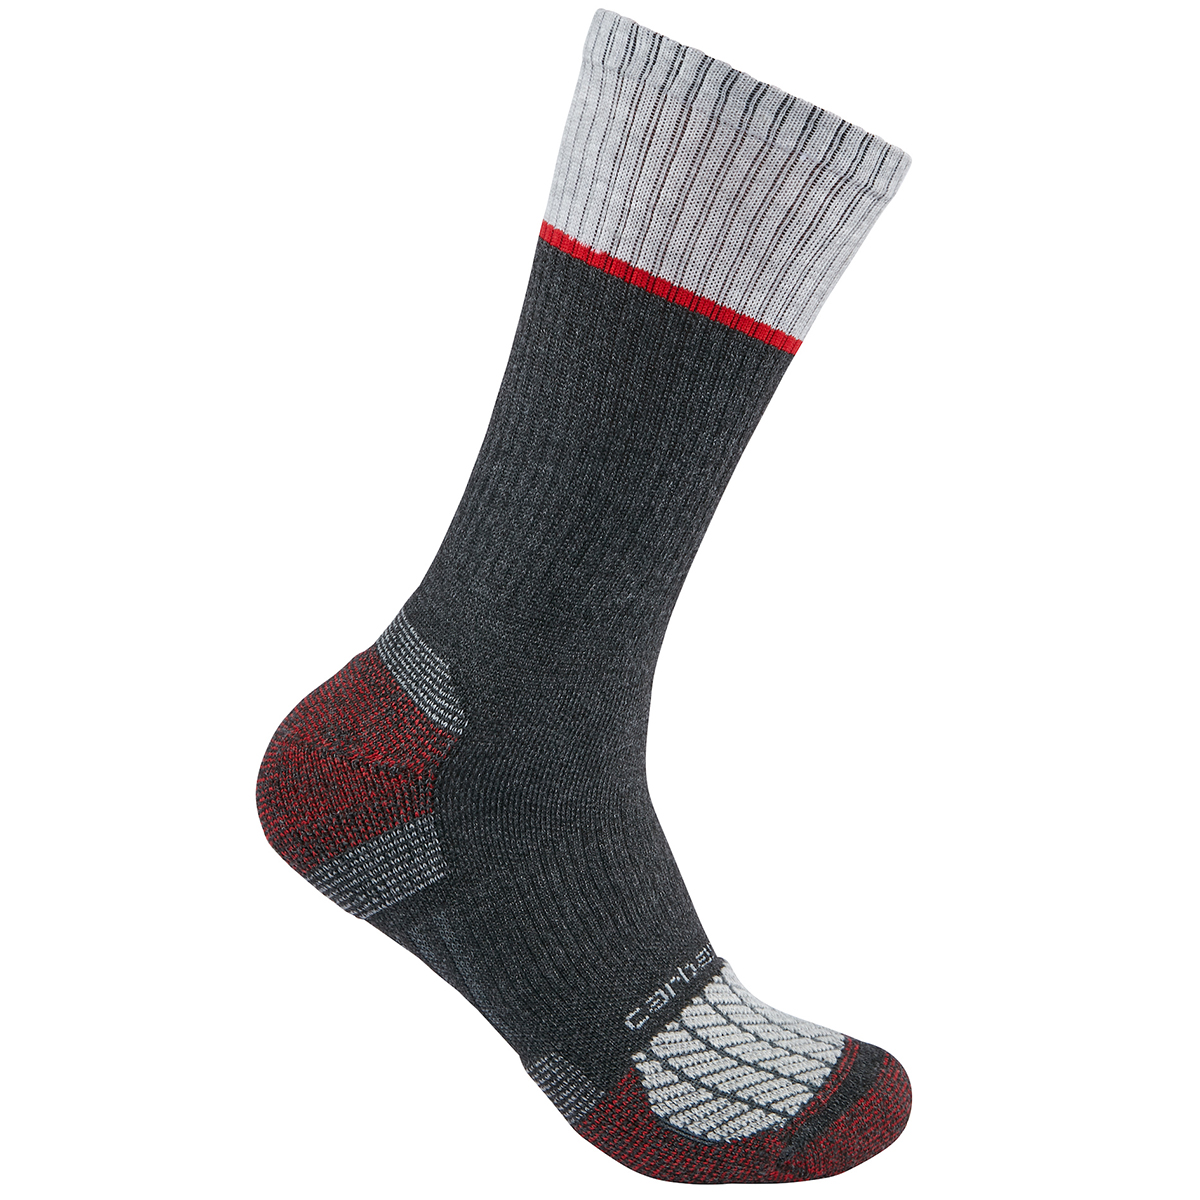 Carhartt Men's Force Midweight Socks, 3 Pack